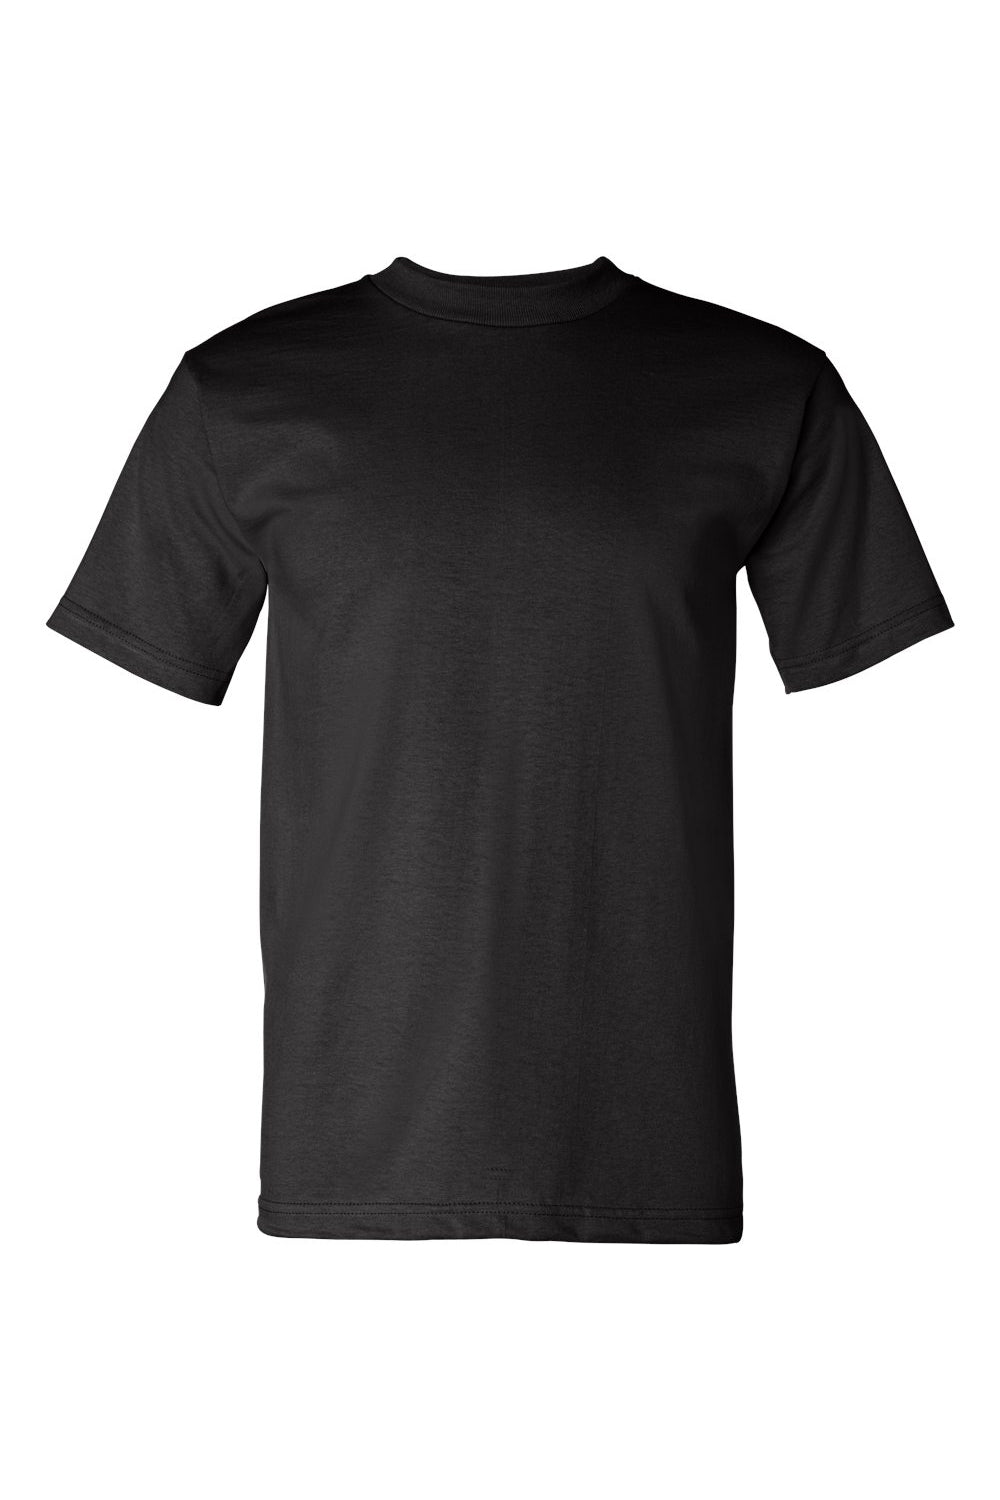 Bayside BA5100 Mens USA Made Short Sleeve Crewneck T-Shirt Black Flat Front